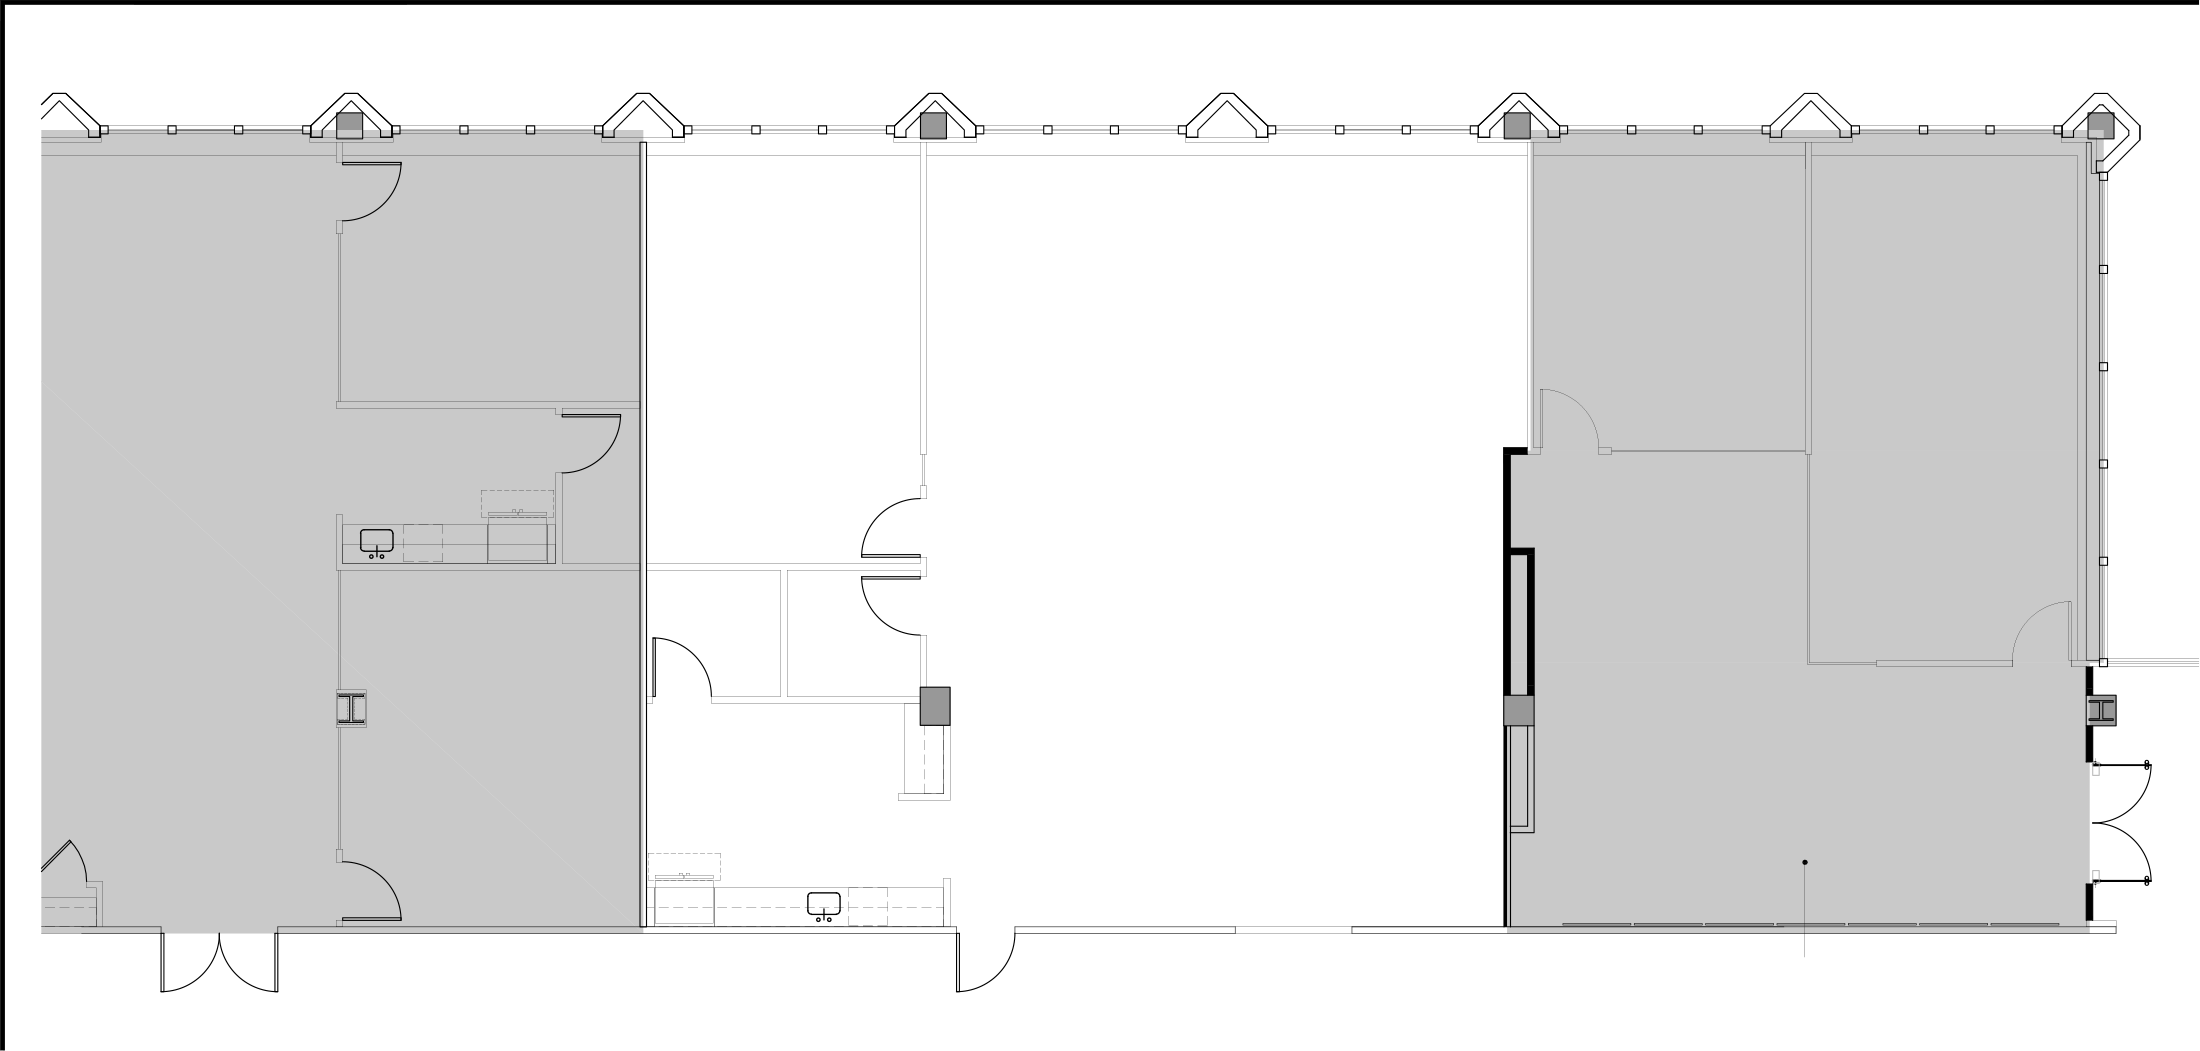 shippan landing floor plan